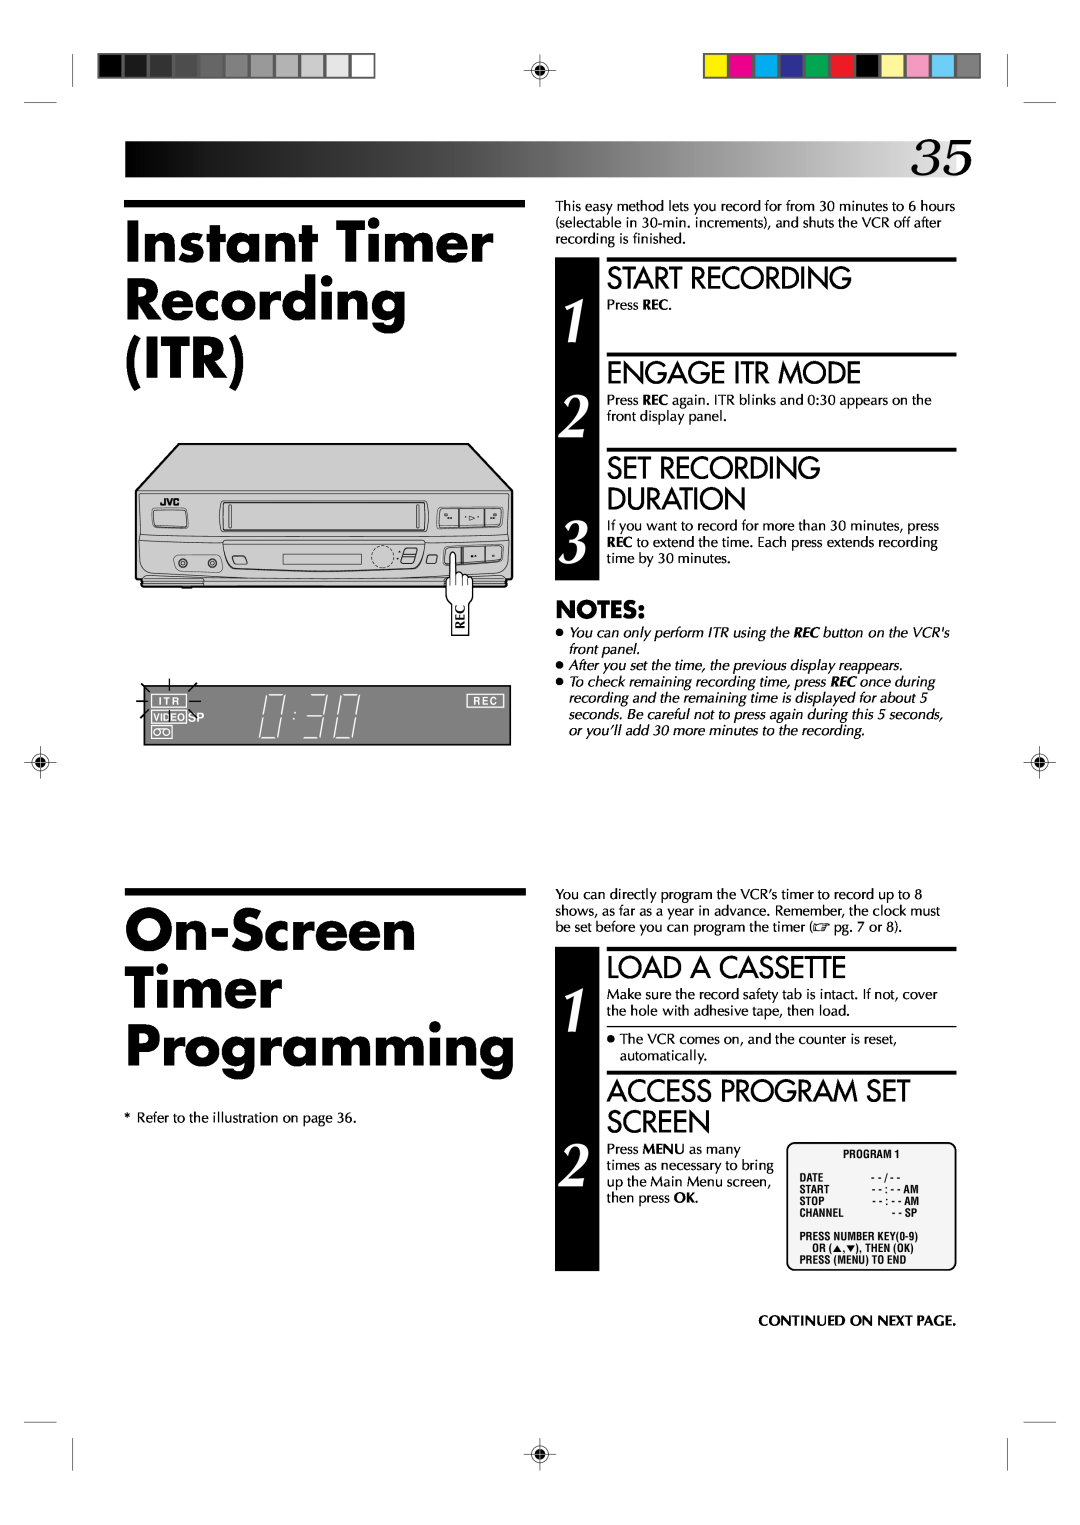 JVC HR-VP434U manual Instant Timer Recording ITR, On-Screen Timer Programming, Engage Itr Mode, Set Recording Duration 